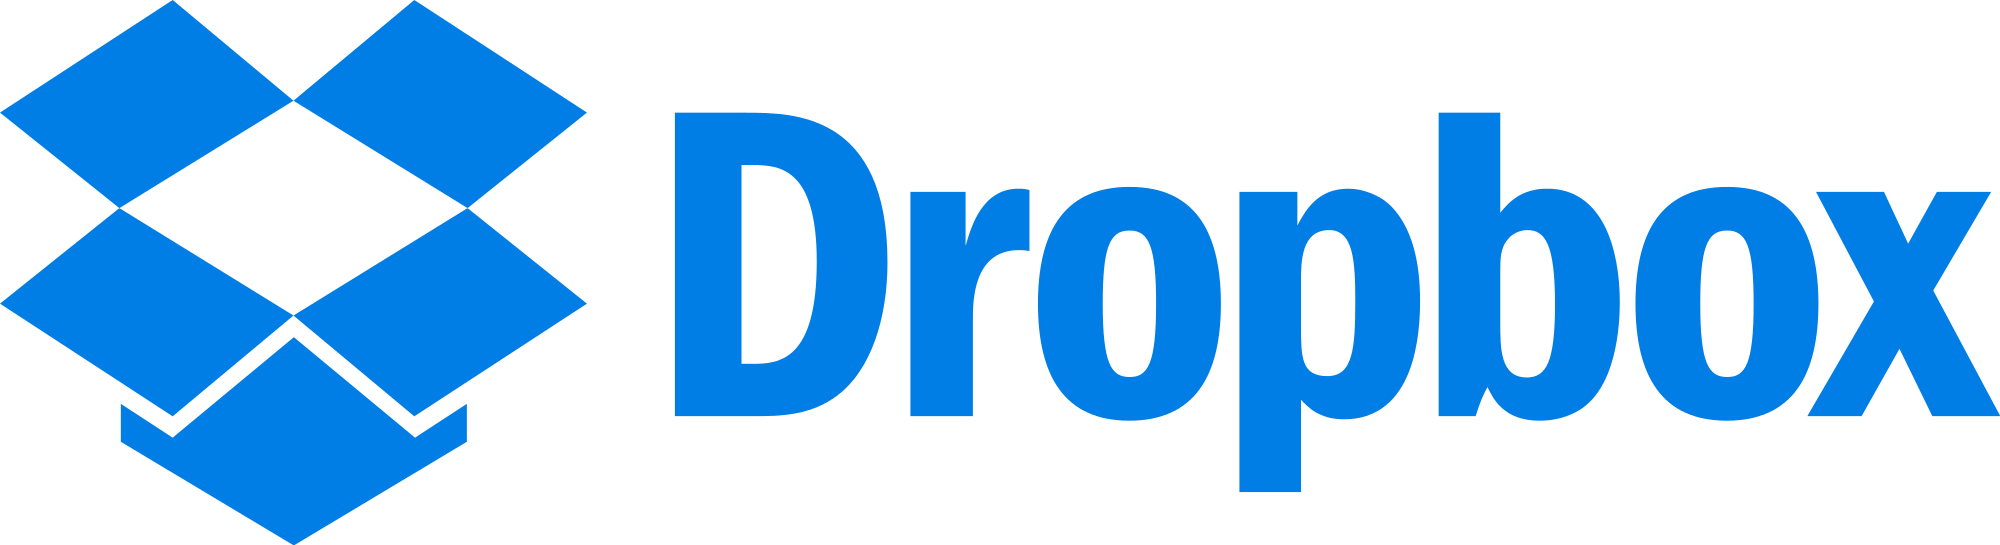 Dropbox.com Logo - File:Dropbox logo (2013).svg - Wikimedia Commons